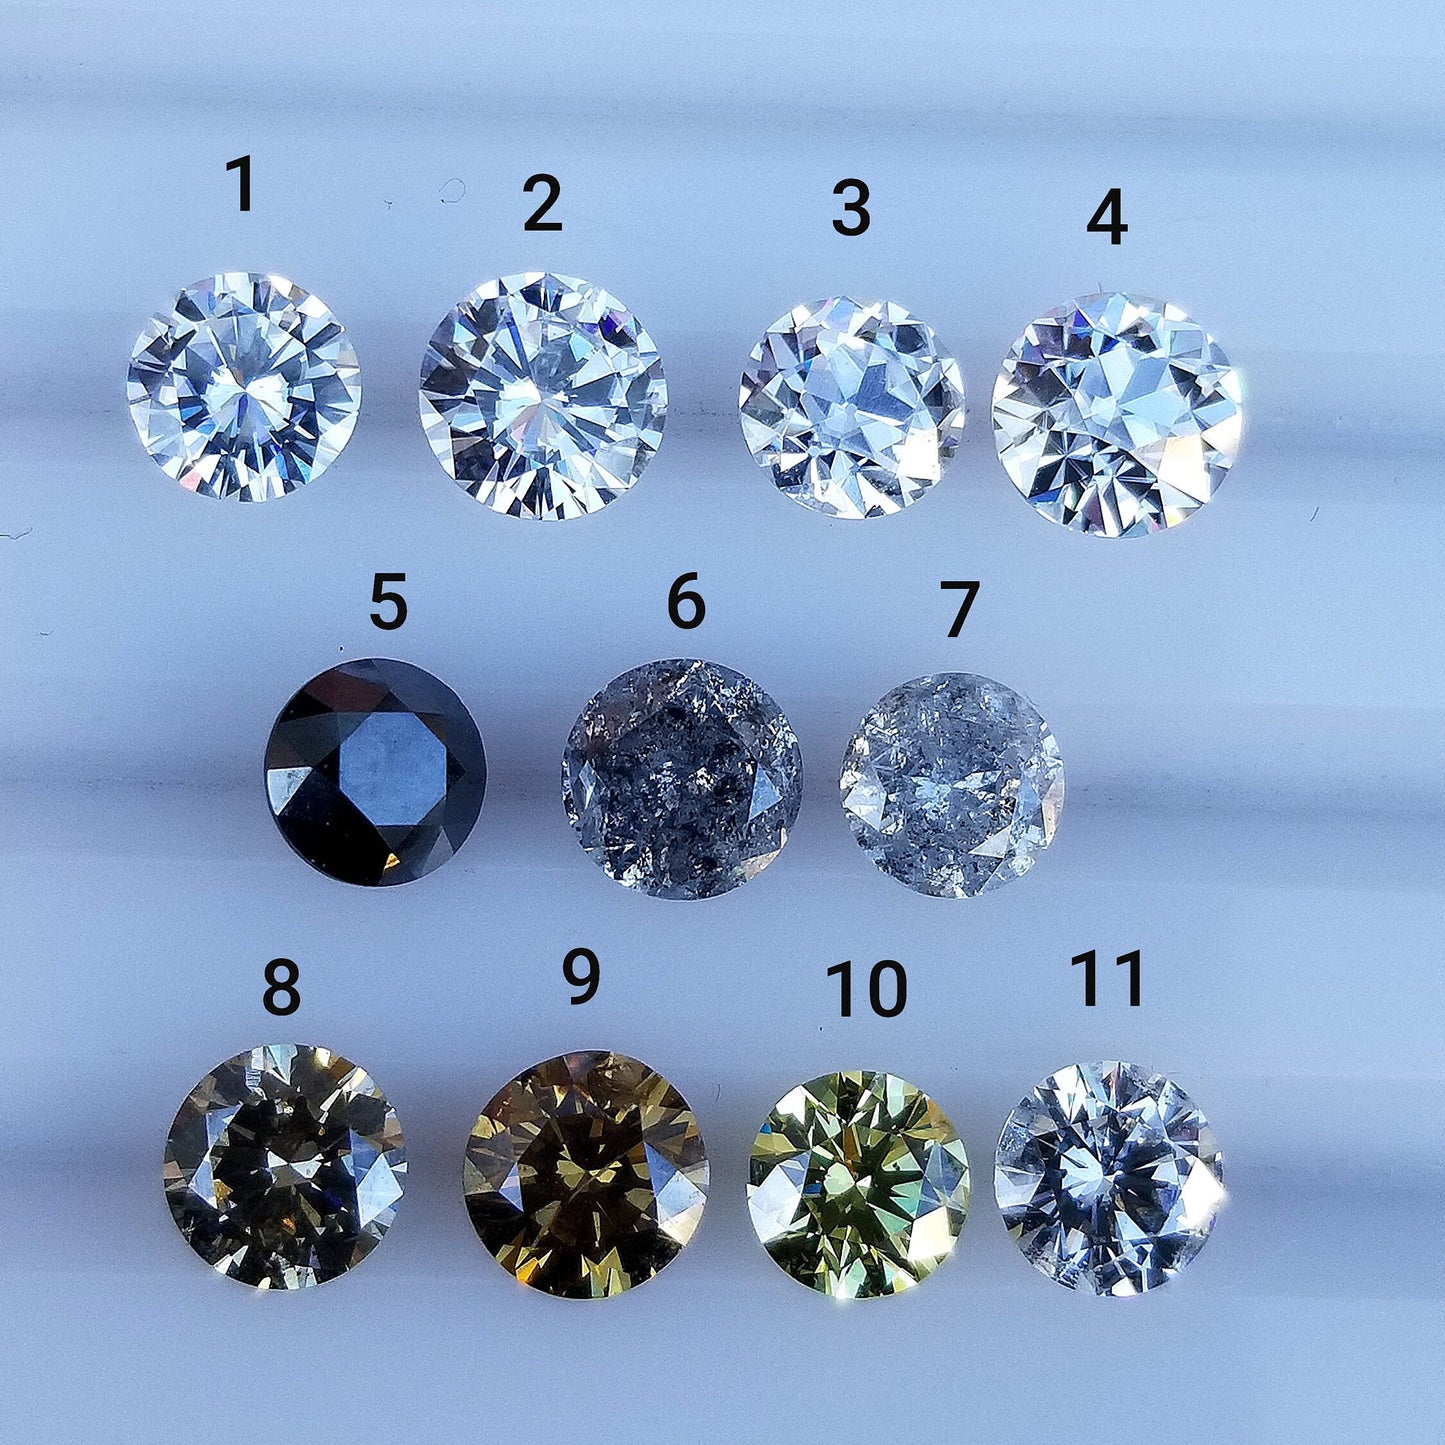 Diamond Cosmos Boho Engagement Ring Set - Diamond, Champagne Diamond, Black Diamond, Salt & Pepper Diamond or Moissanite Center Stone